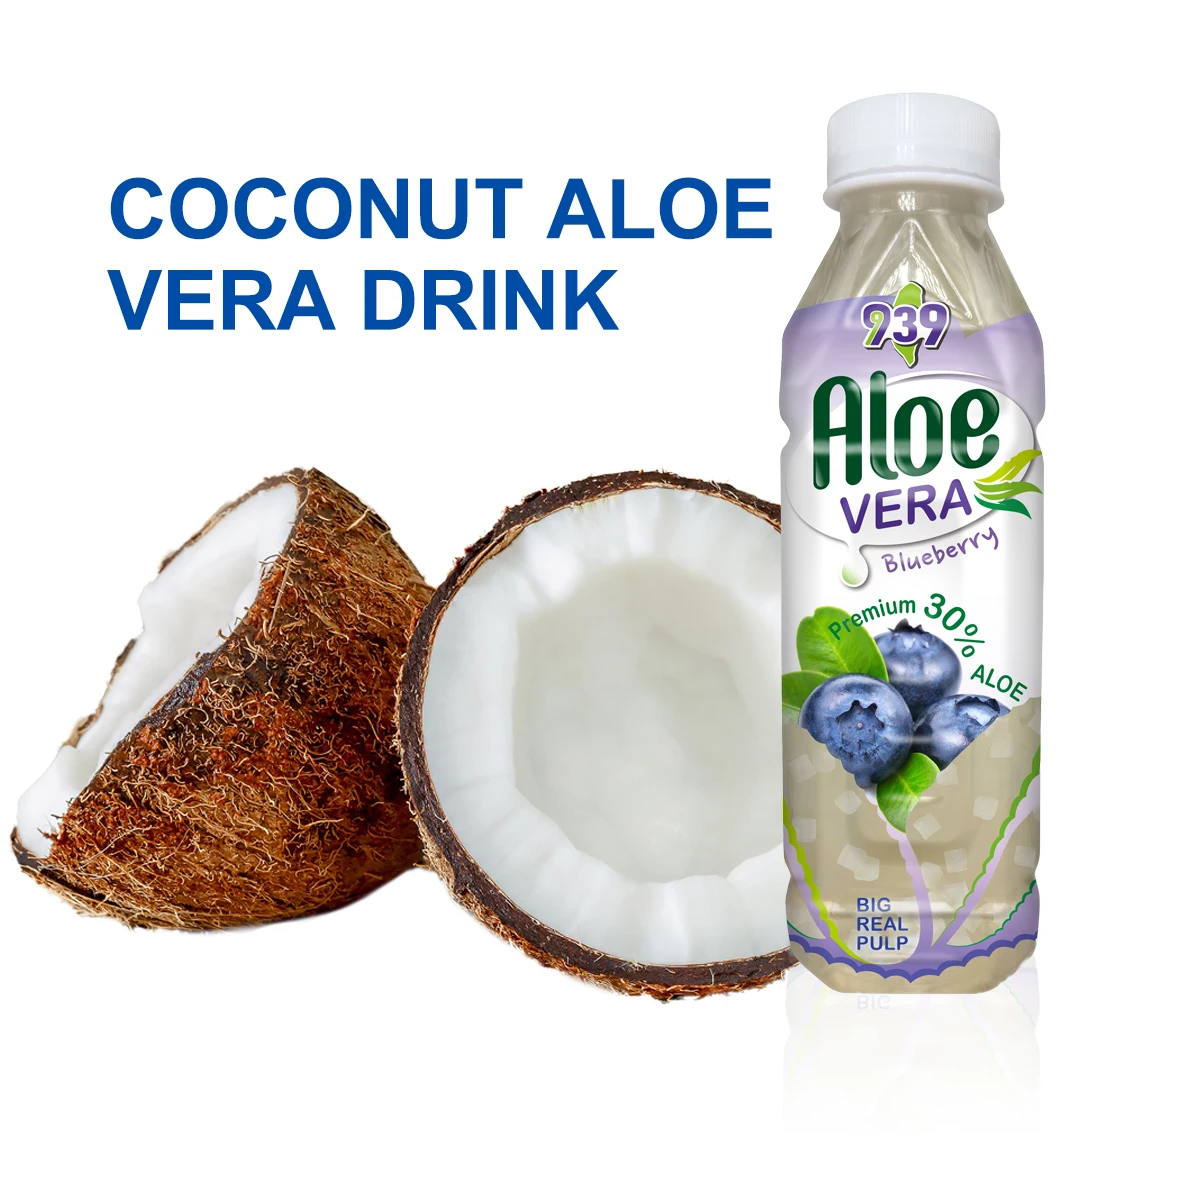 Aloe Vera Drink Original with Real Pulp Grape Juice added Beverage Product Development